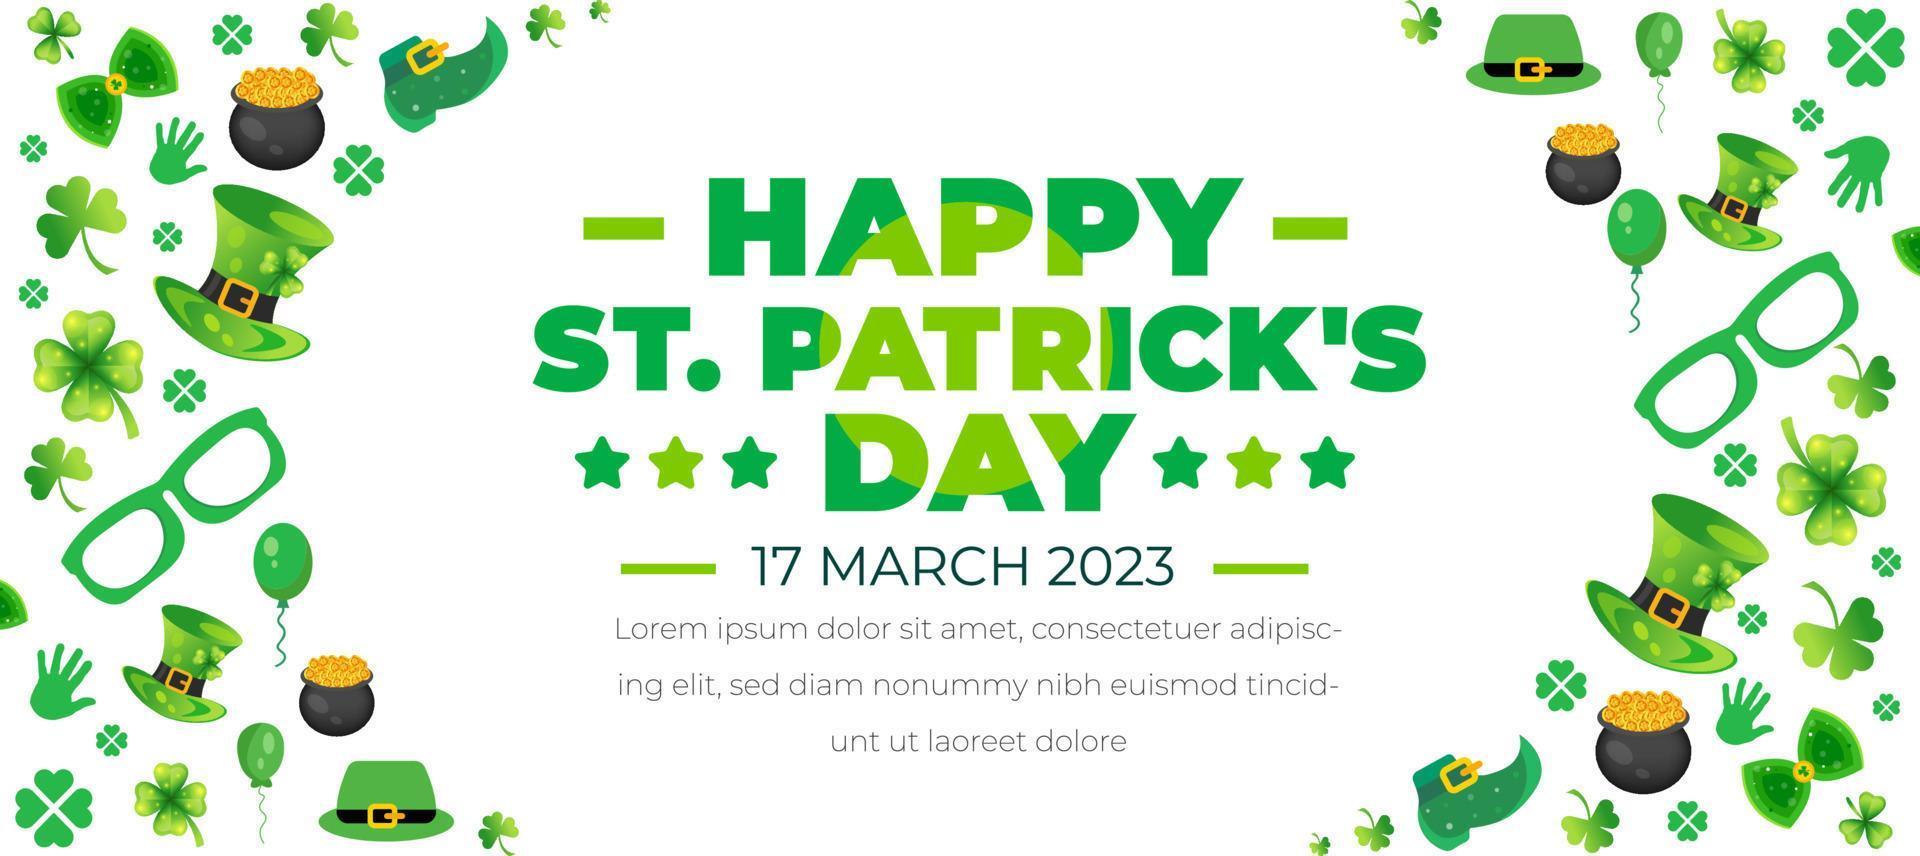 Happy St.Patrick's Day background with shamrock clover leaf. saint patrick's day festival background. Clover shamrock leaf seamless border vector template for Saint Patrick's Day event celebration